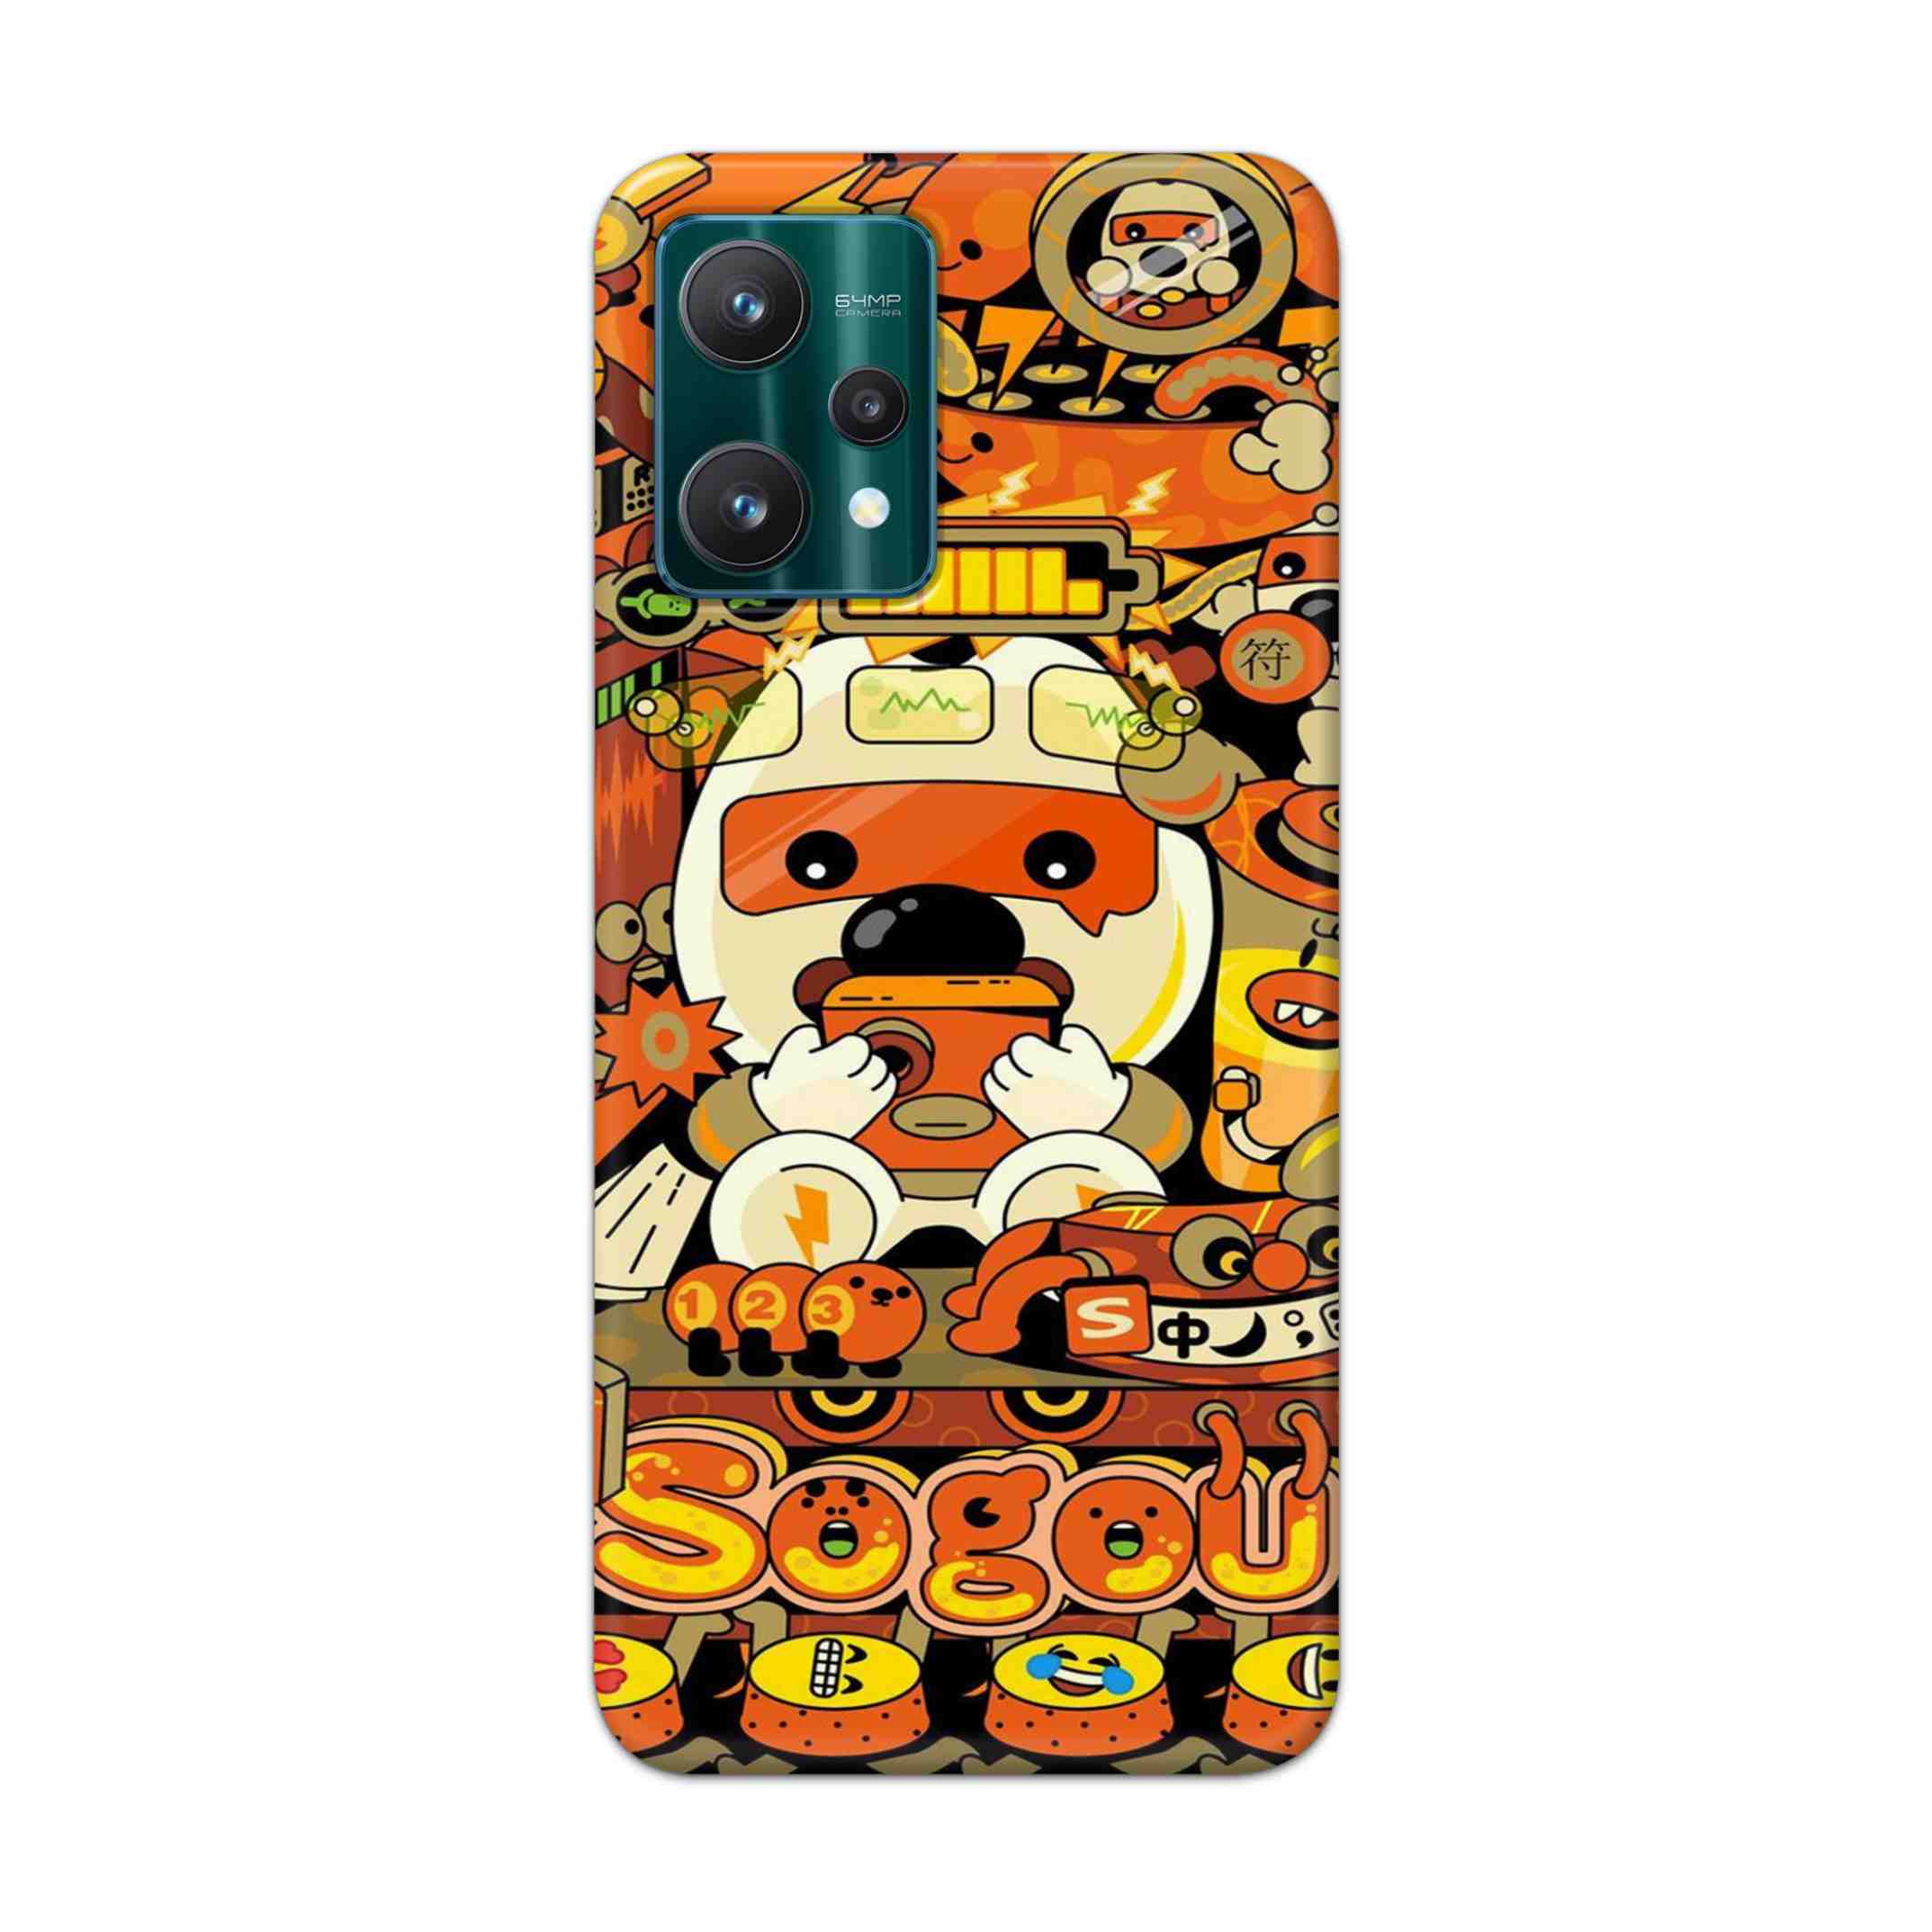 Buy Sogou Hard Back Mobile Phone Case Cover For Realme 9 Pro Online